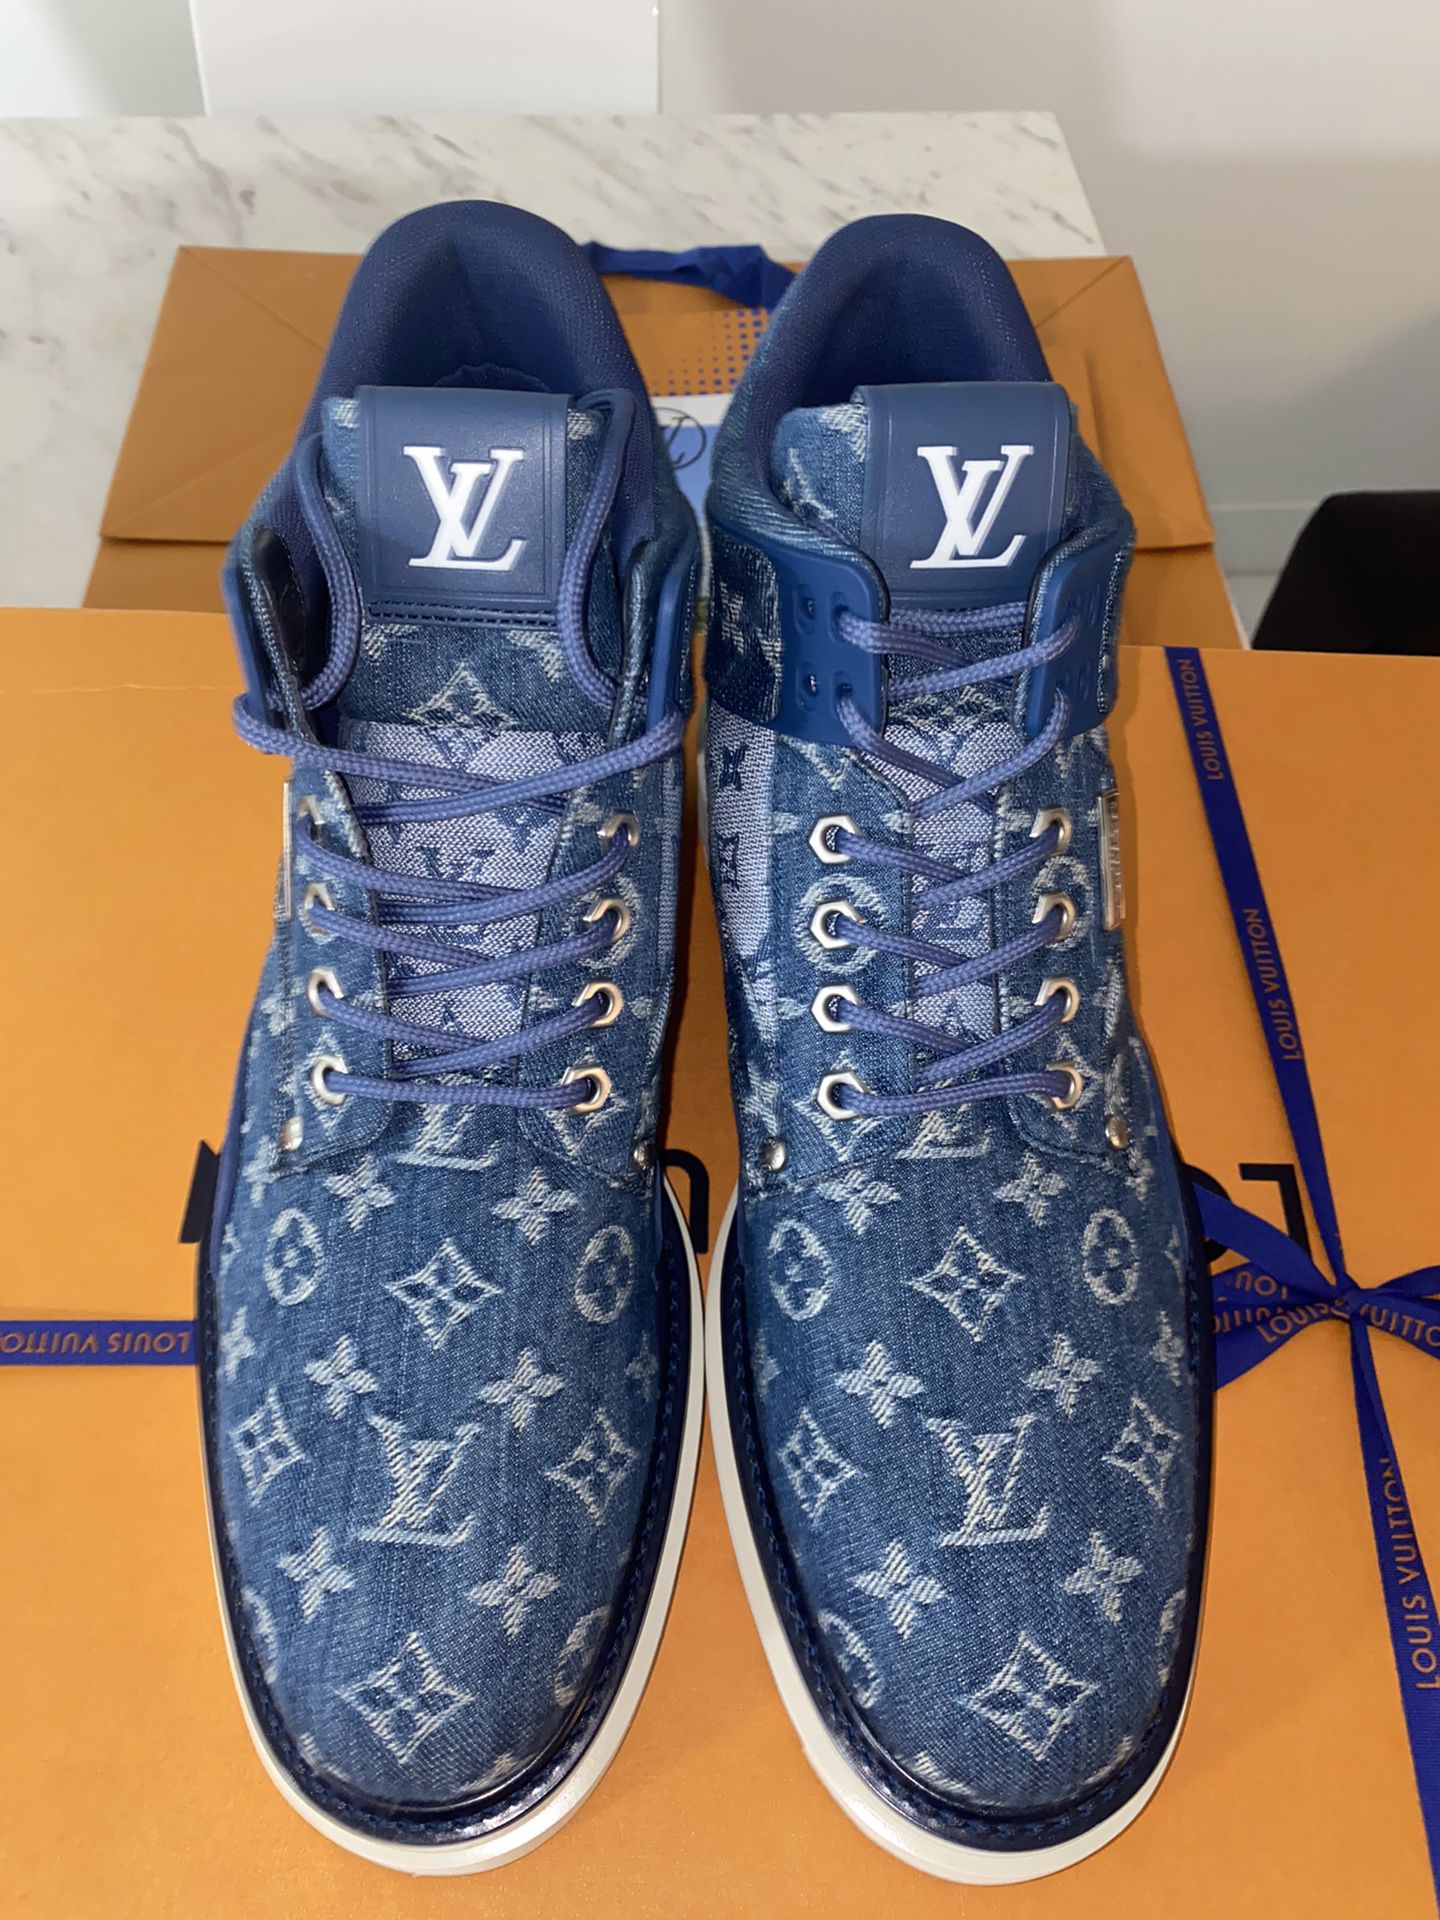 Louis Vuitton Boots Size 38 Originals for Sale in Miami, FL - OfferUp